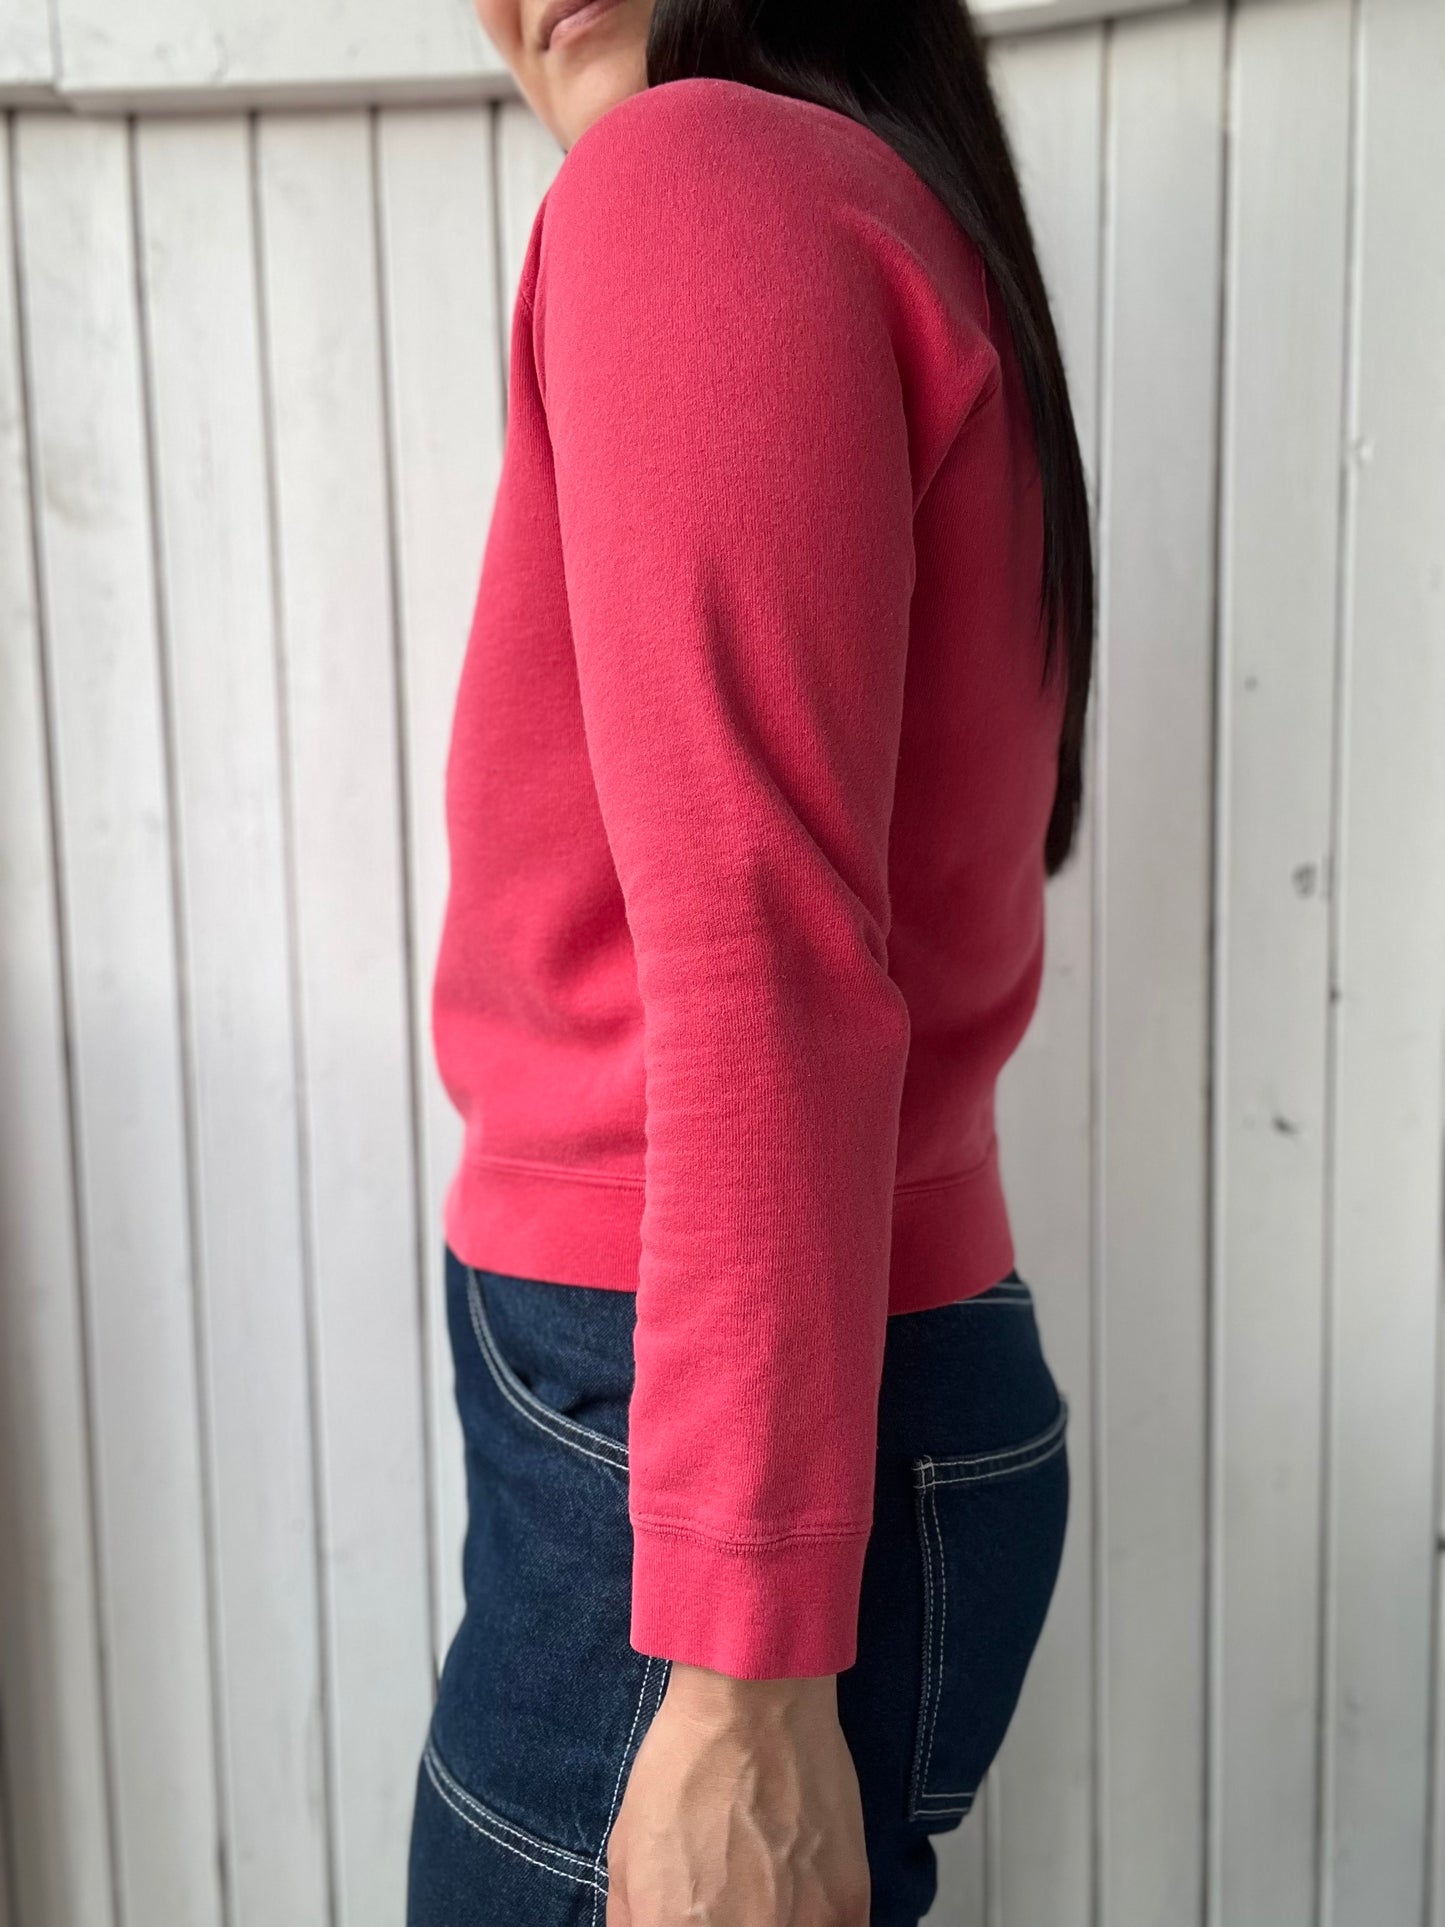 Polo Ralph Lauren Sweater - Size S